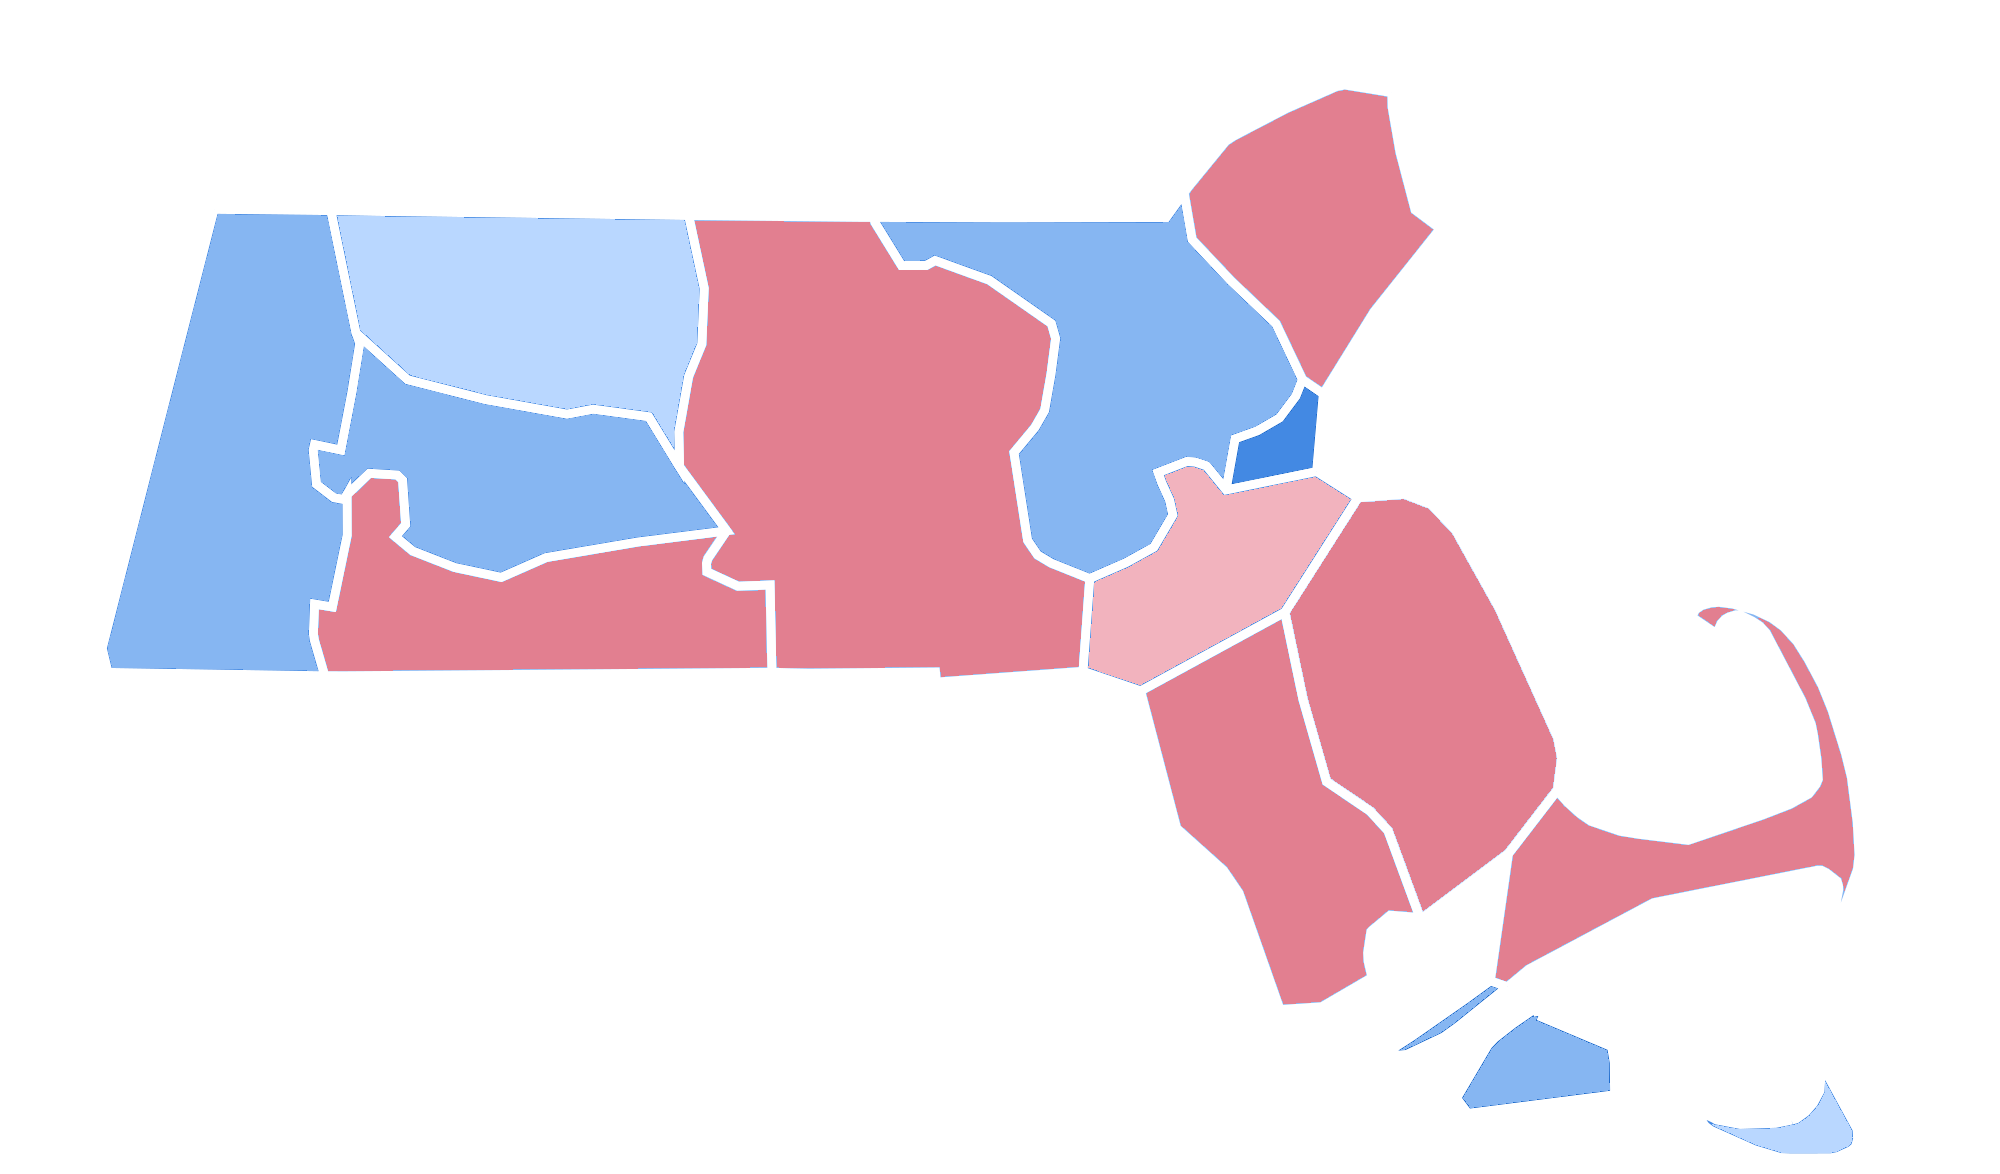 Massachusetts_Presidential_Election_Results_2016_Republican_Landslide_15.06%.png